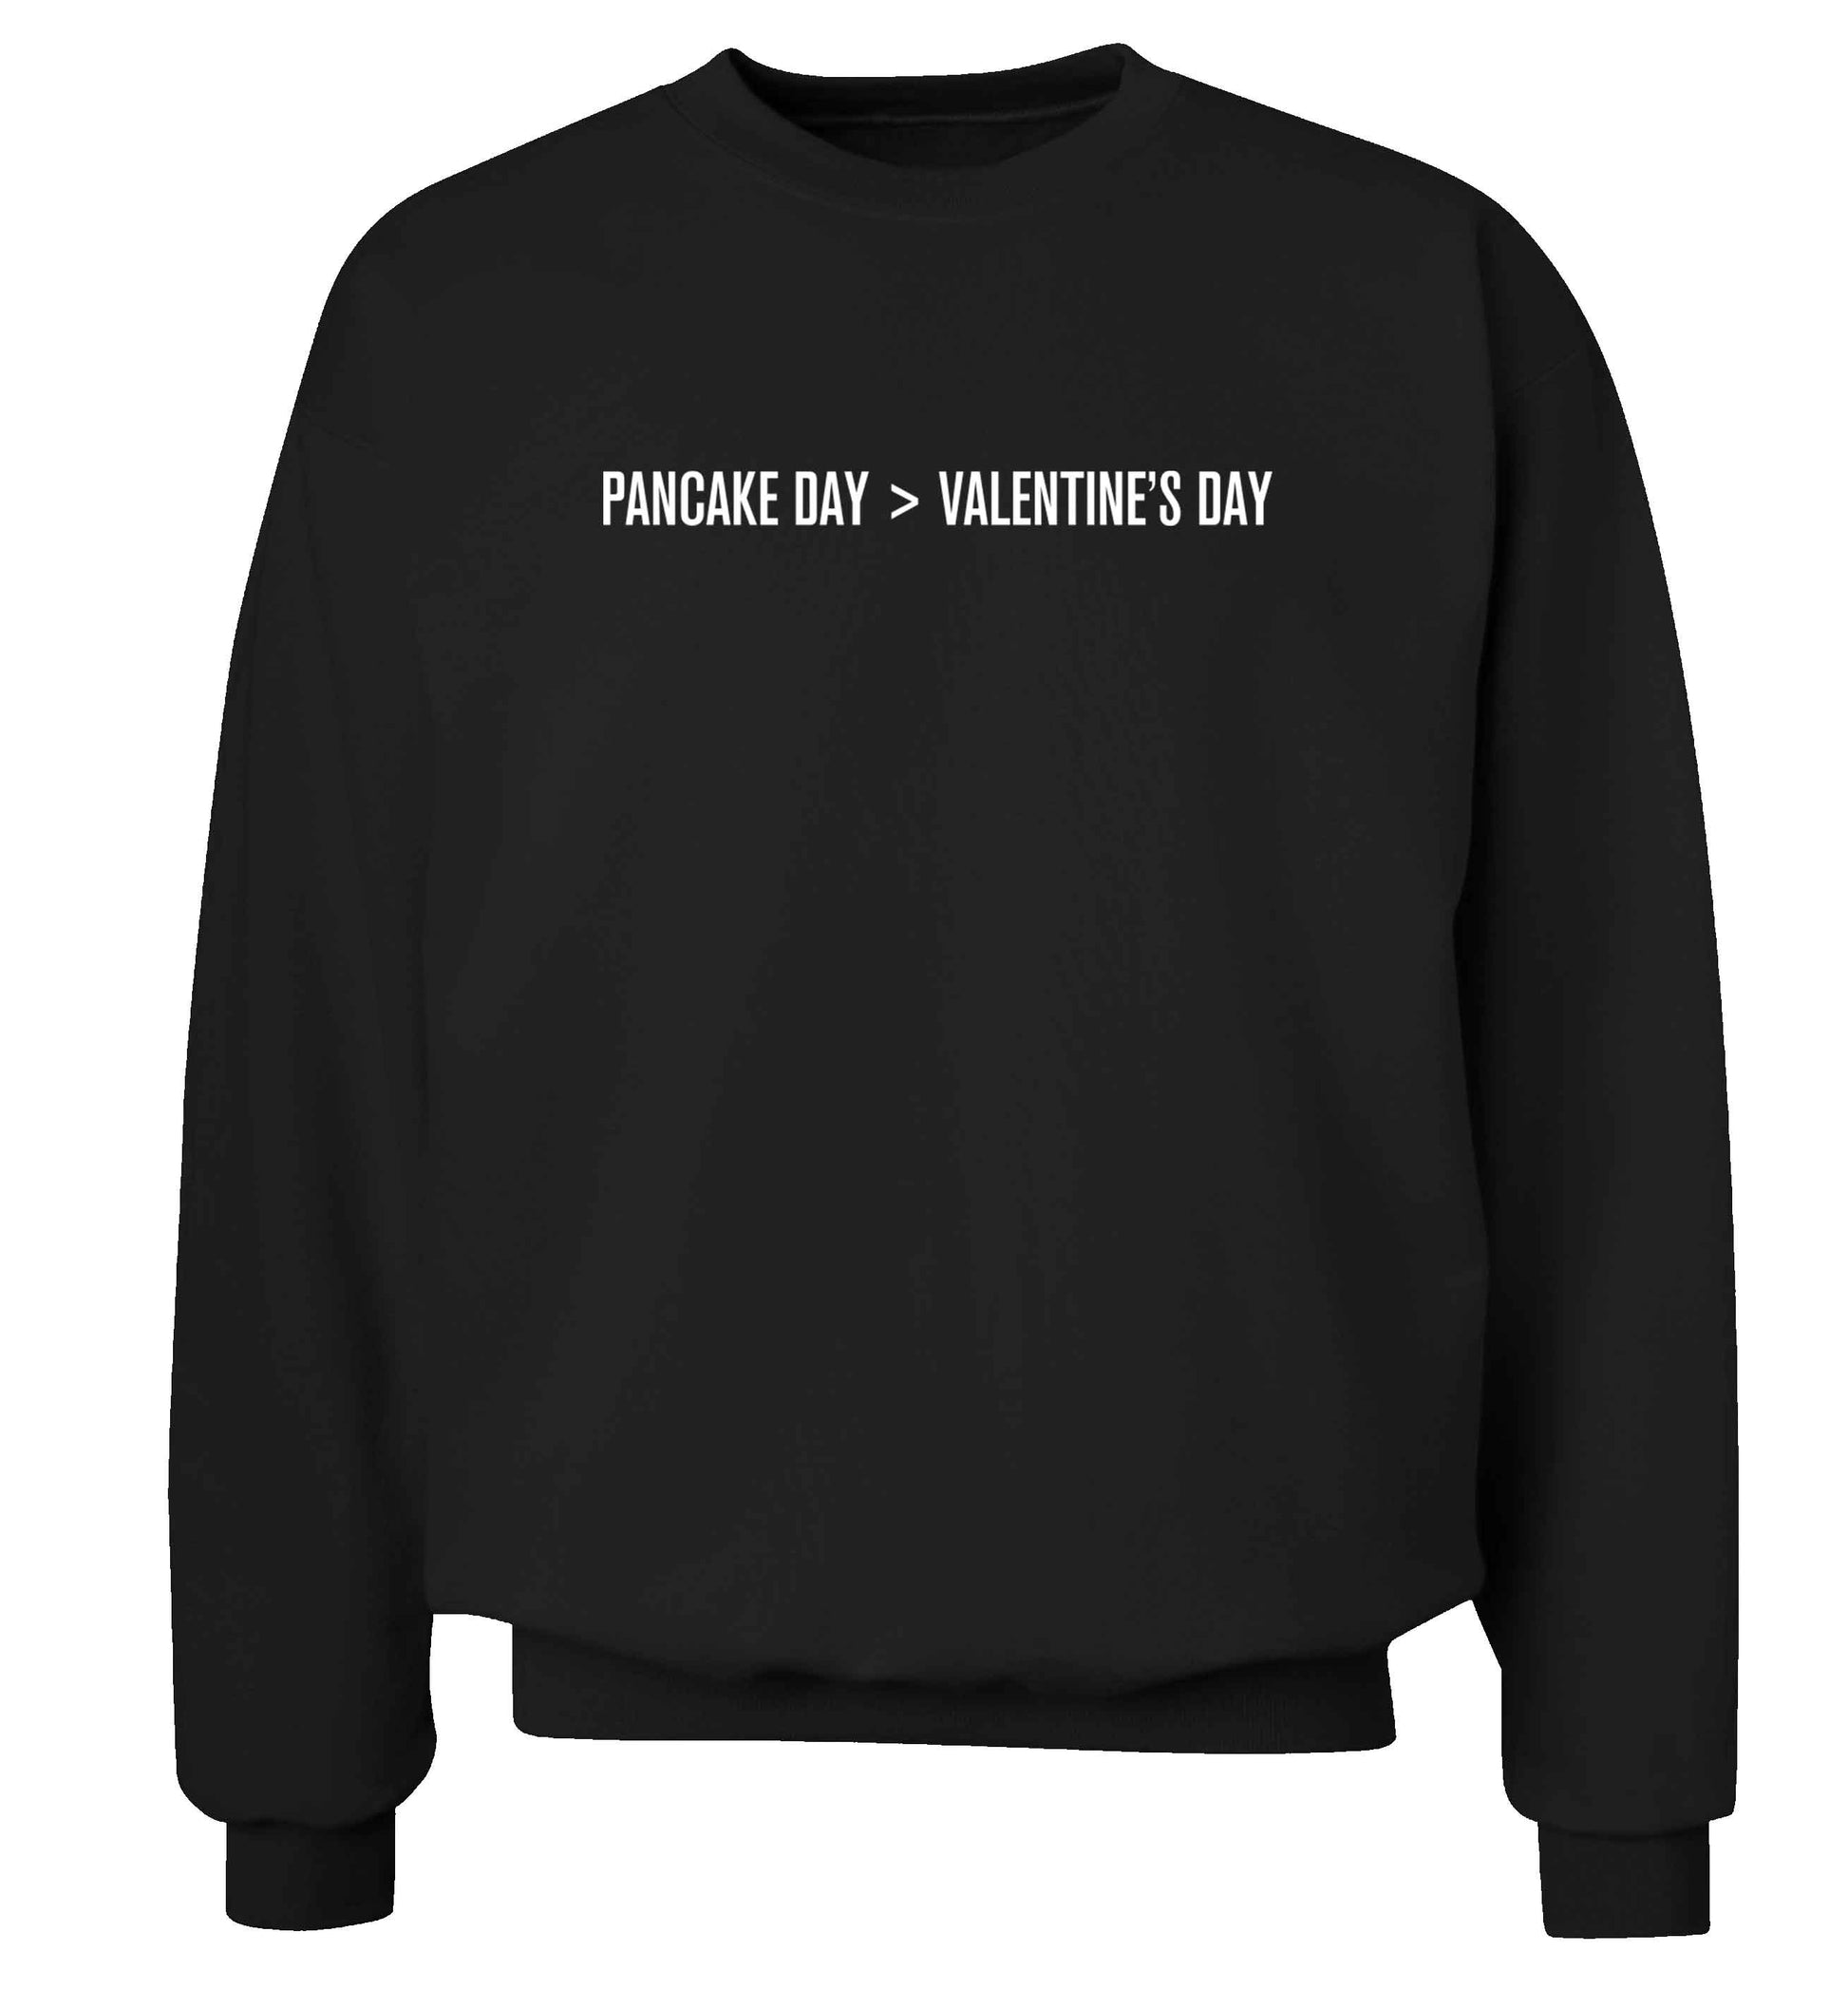 Pancake day > valentines day adult's unisex black sweater 2XL